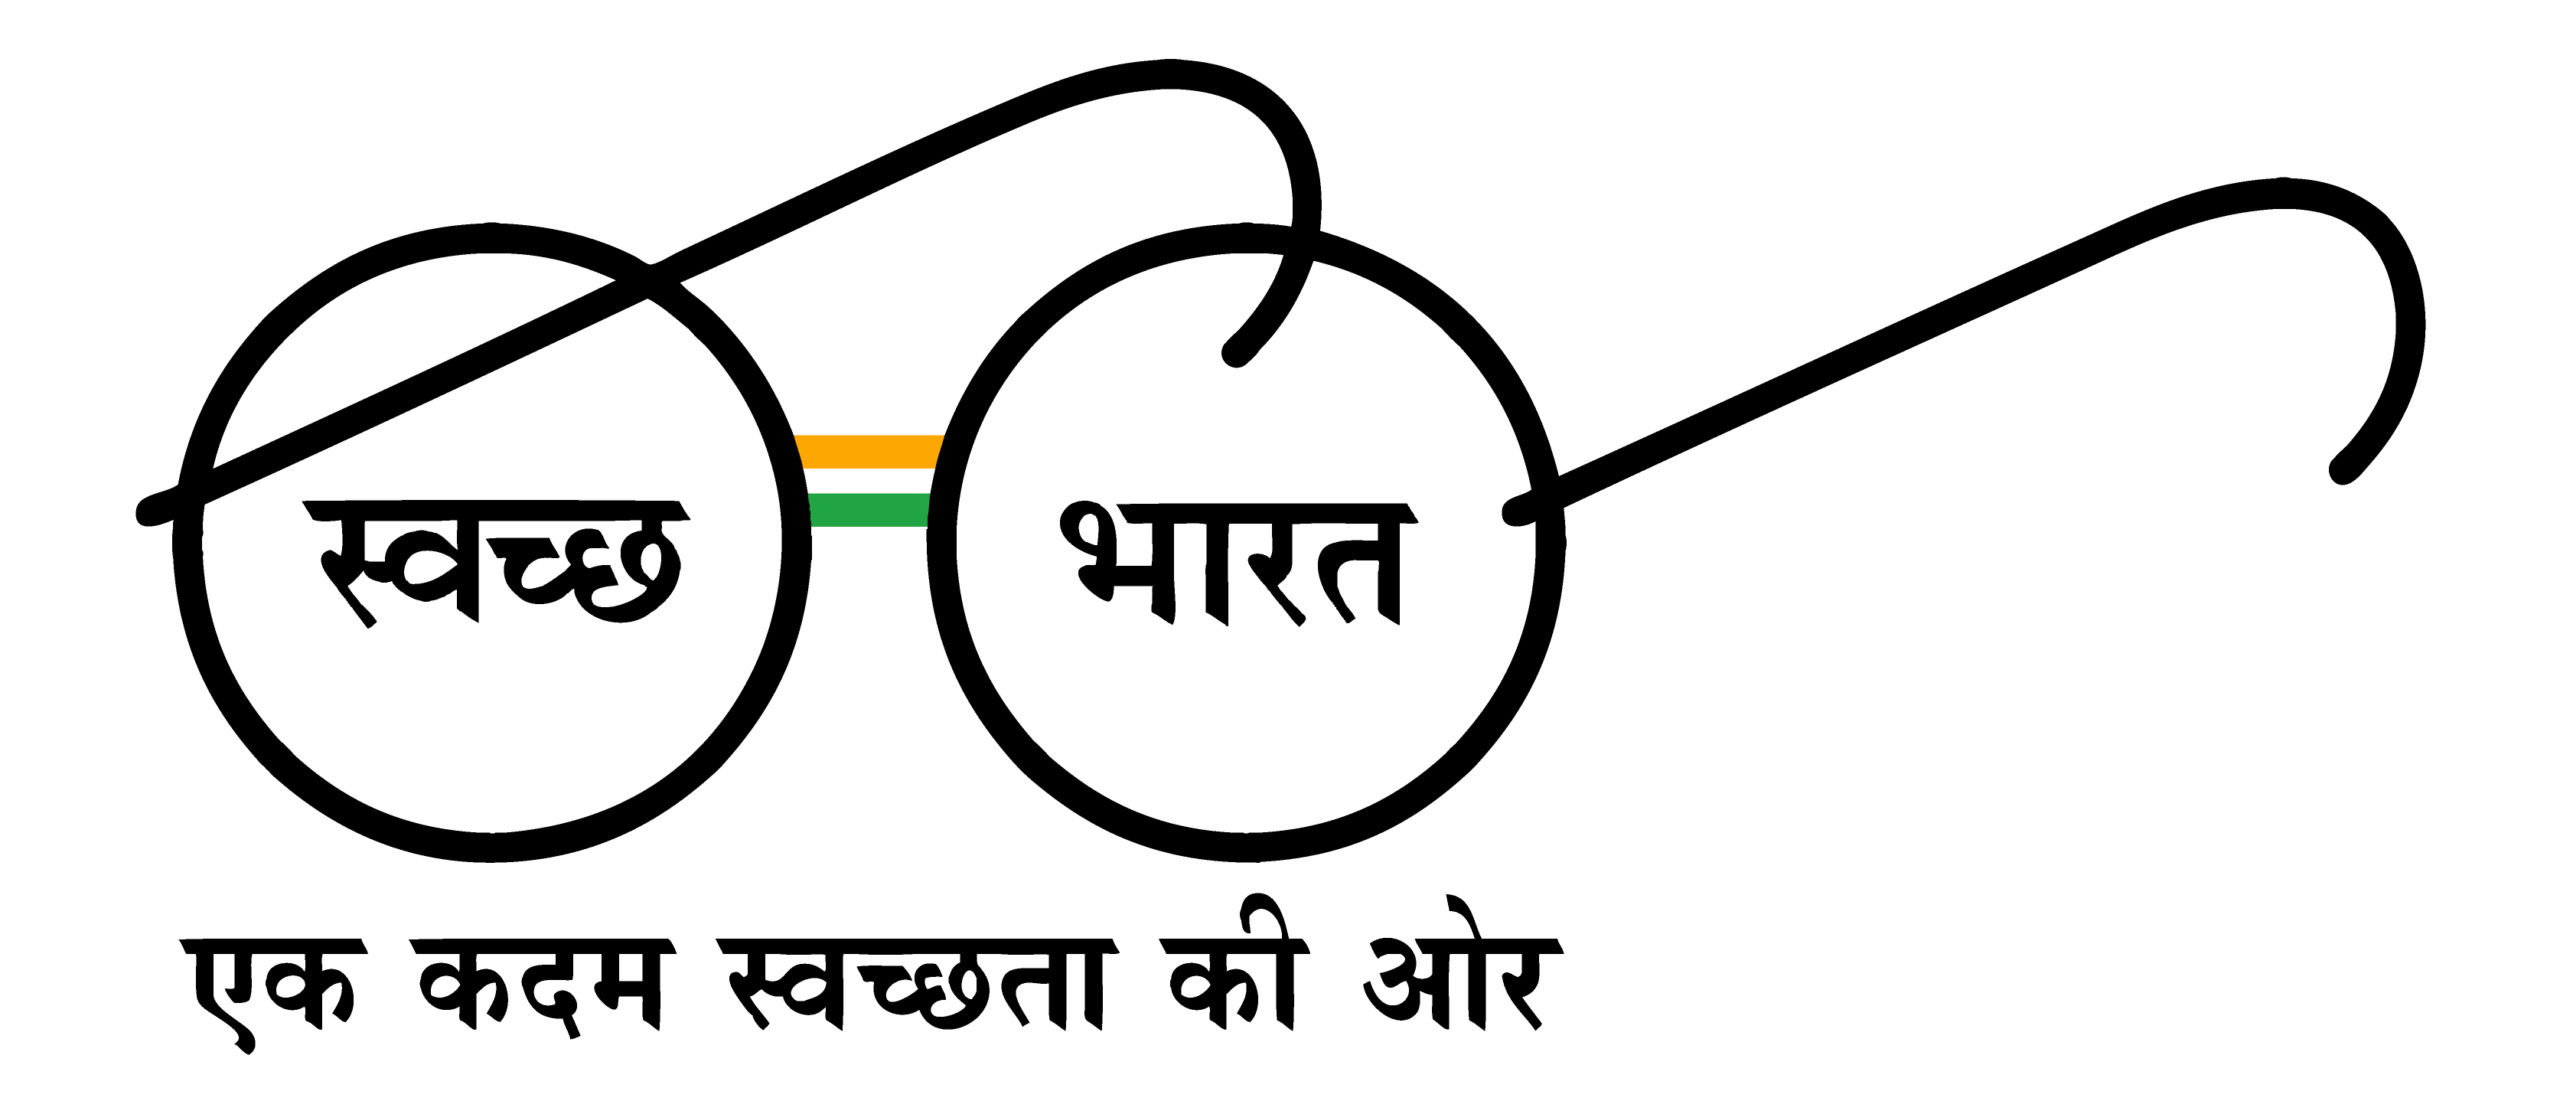 swachh-bharat-abhiyan-logo-vector-file